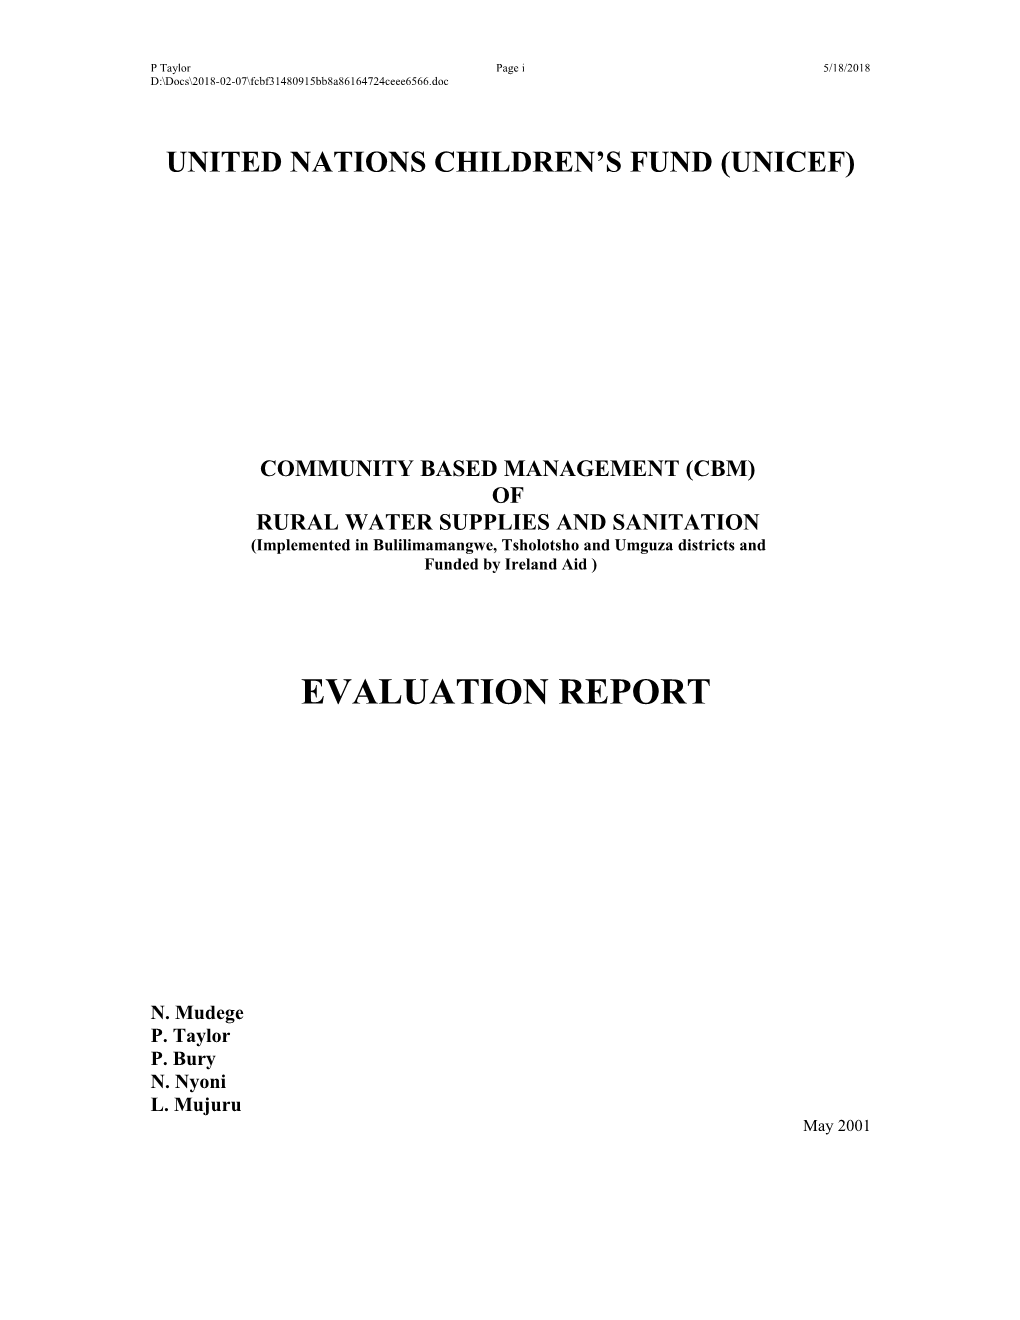 United Nations Children S Fund (Unicef) s2